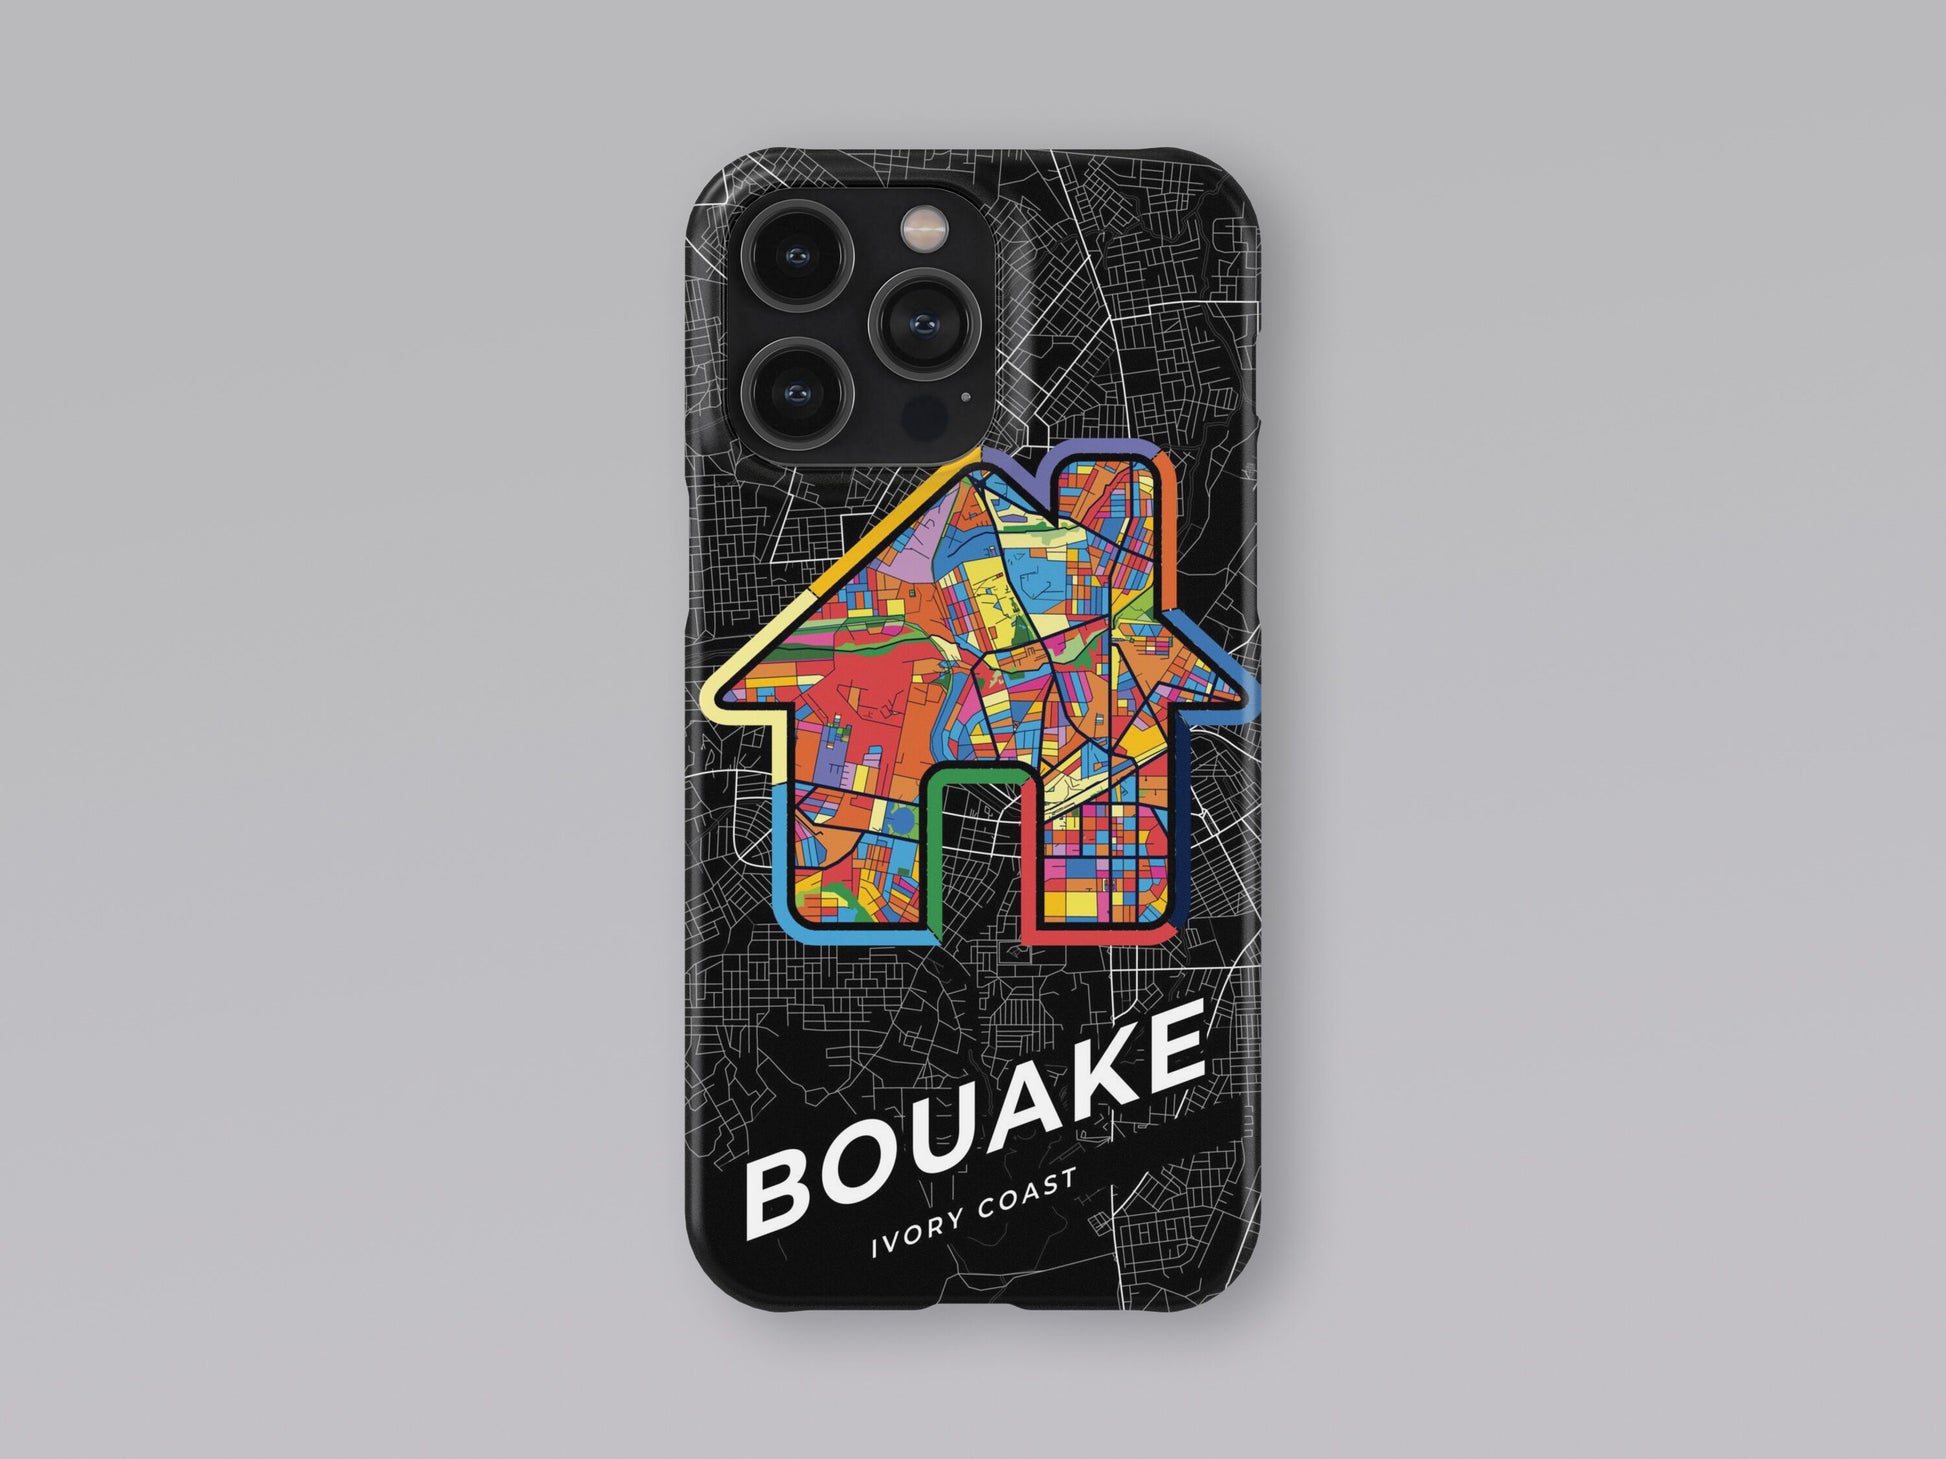 Bouake Ivory Coast slim phone case with colorful icon. Birthday, wedding or housewarming gift. Couple match cases. 3